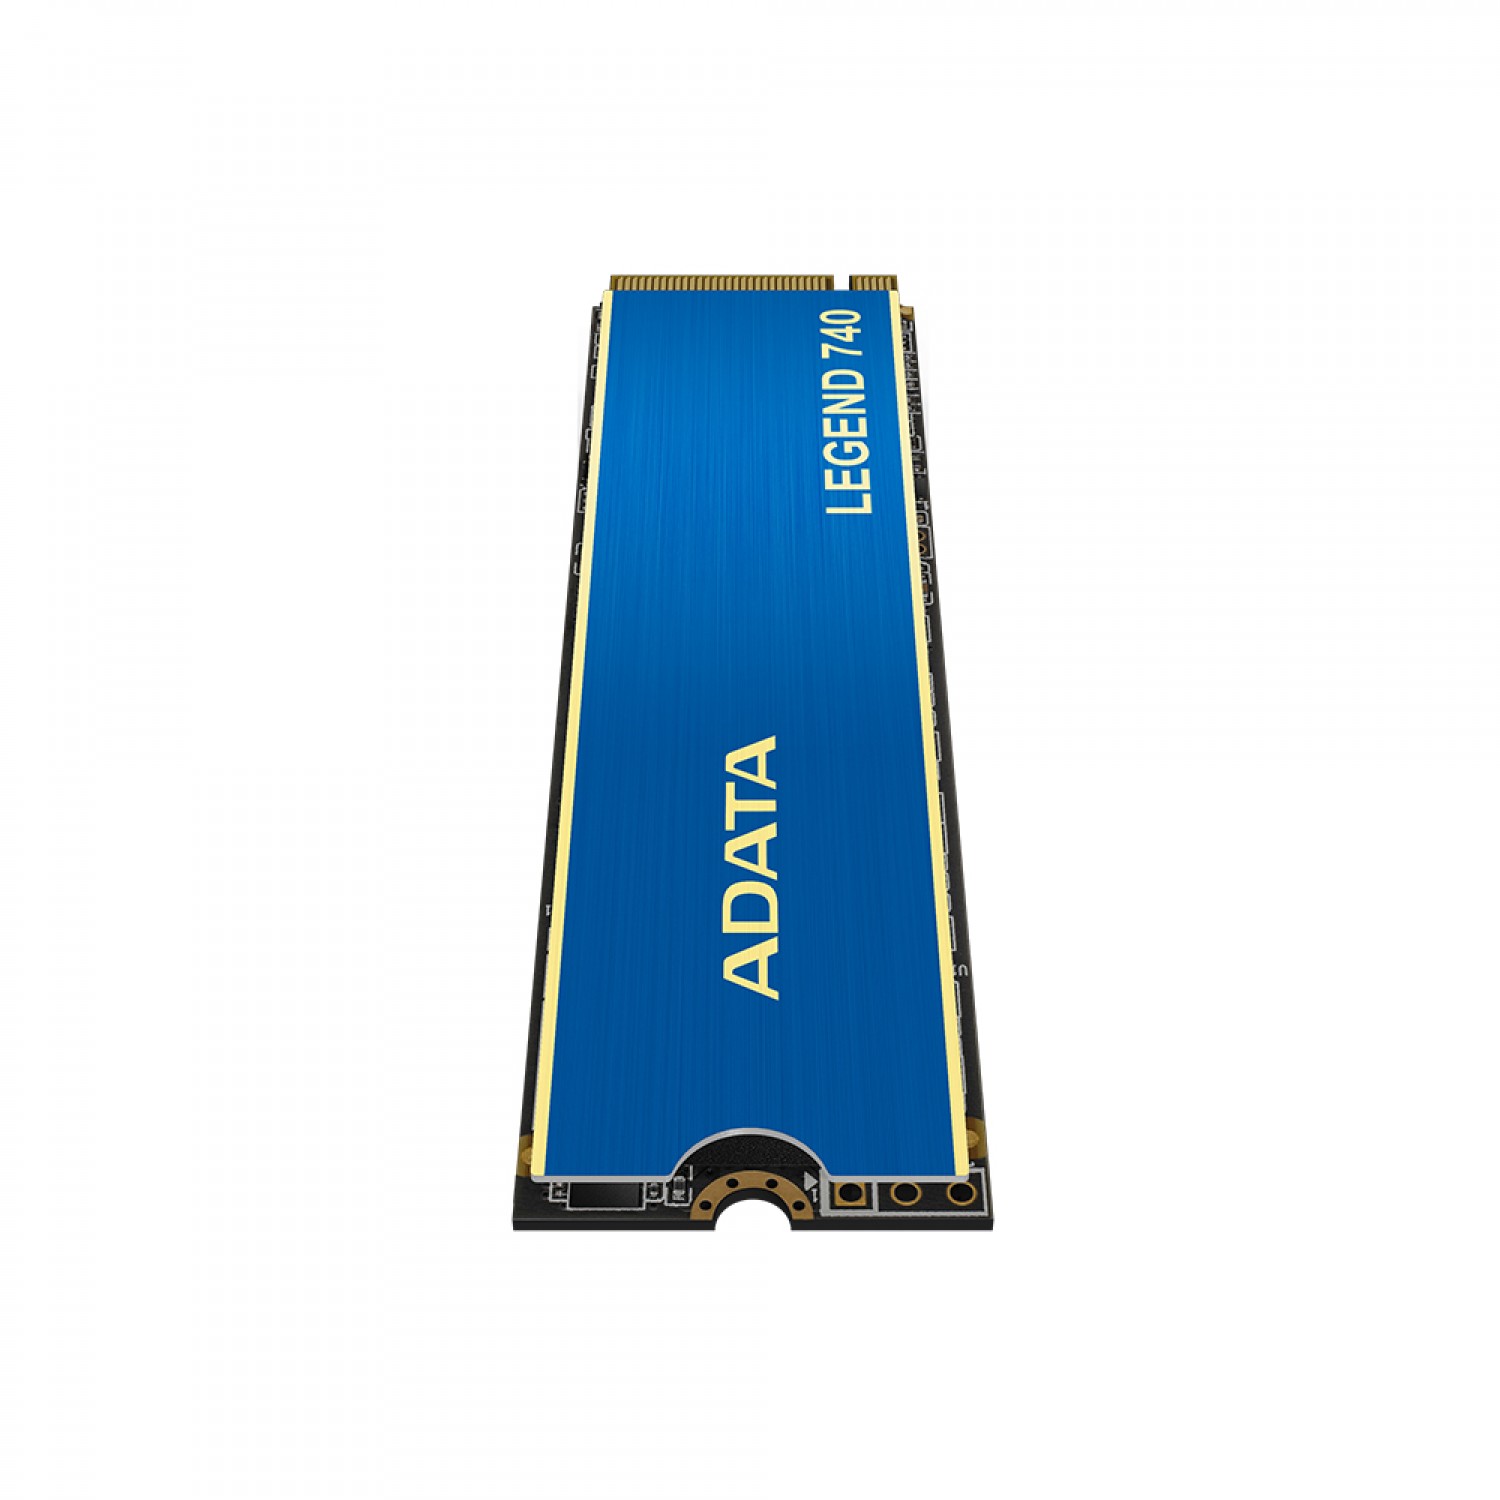 حافظه اس اس دی ADATA Legend 740 250GB-4